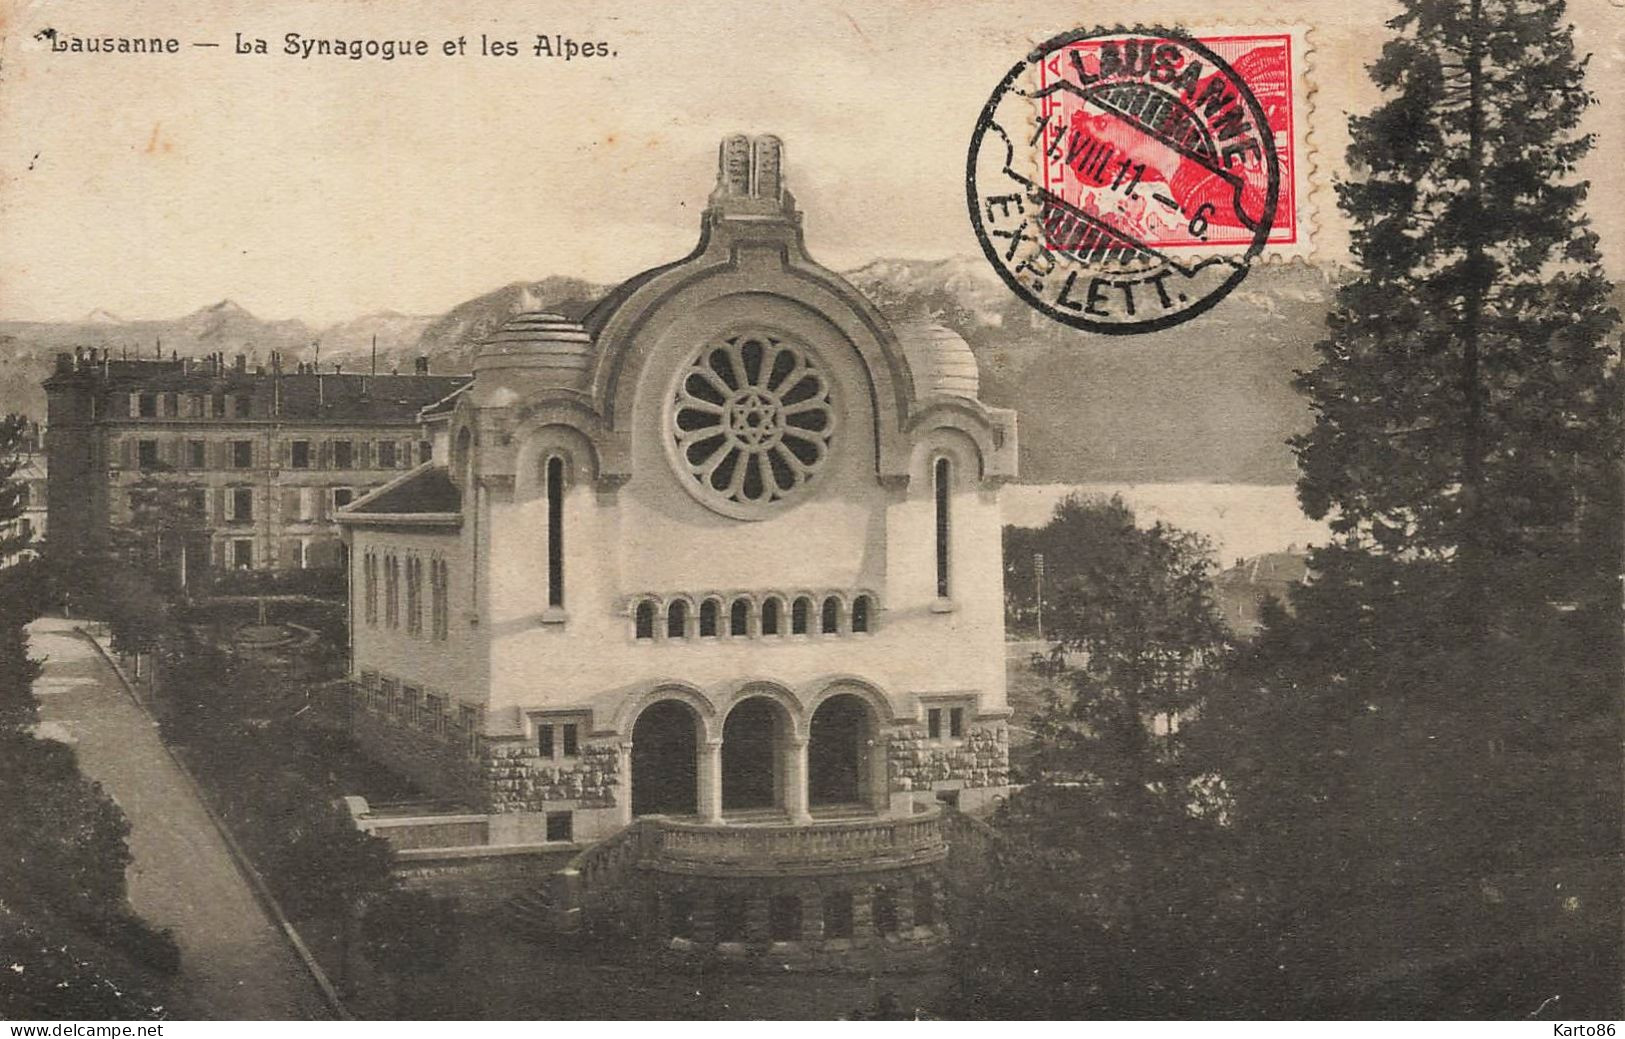 Lausanne , Vaud * La Synagogue Les Alpes * Judaica Synagoge Temple Israélite Juif Judaisme Jew Jewish Suisse Schweiz - Judaika